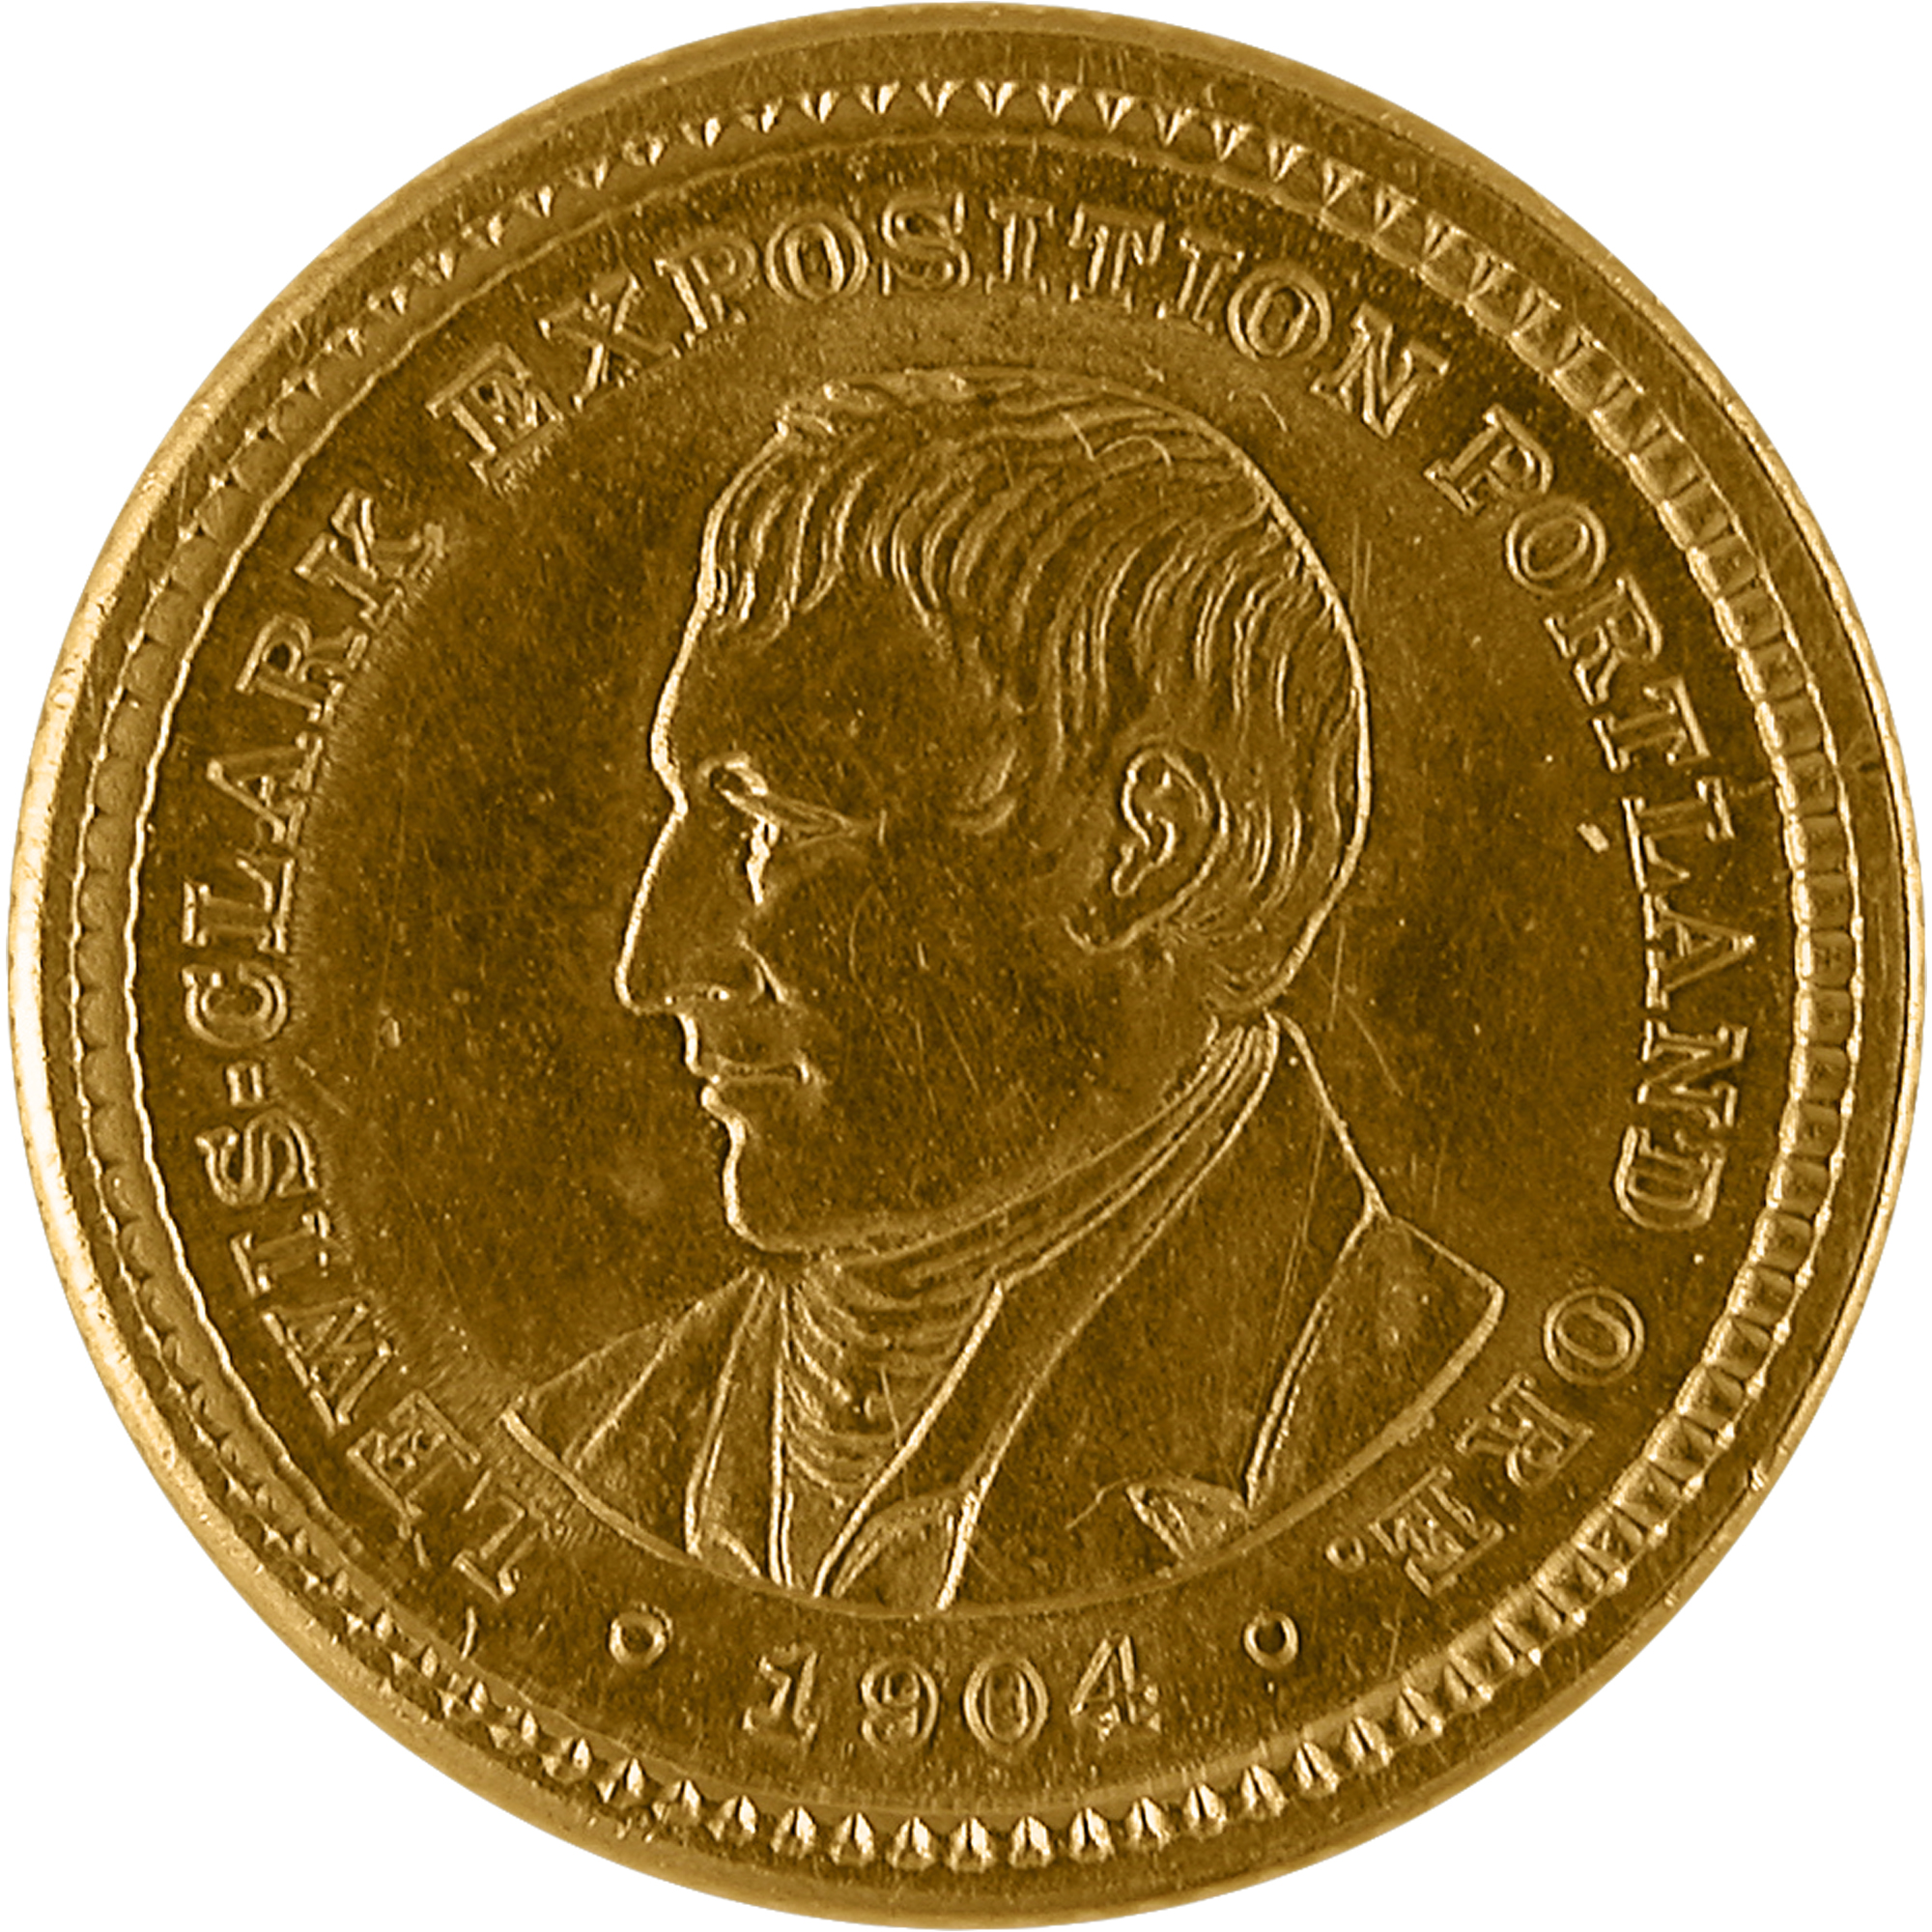 1904-05 Lewis Clark Centennial Exposition Commemorative Gold One Dollar Coin Obverse